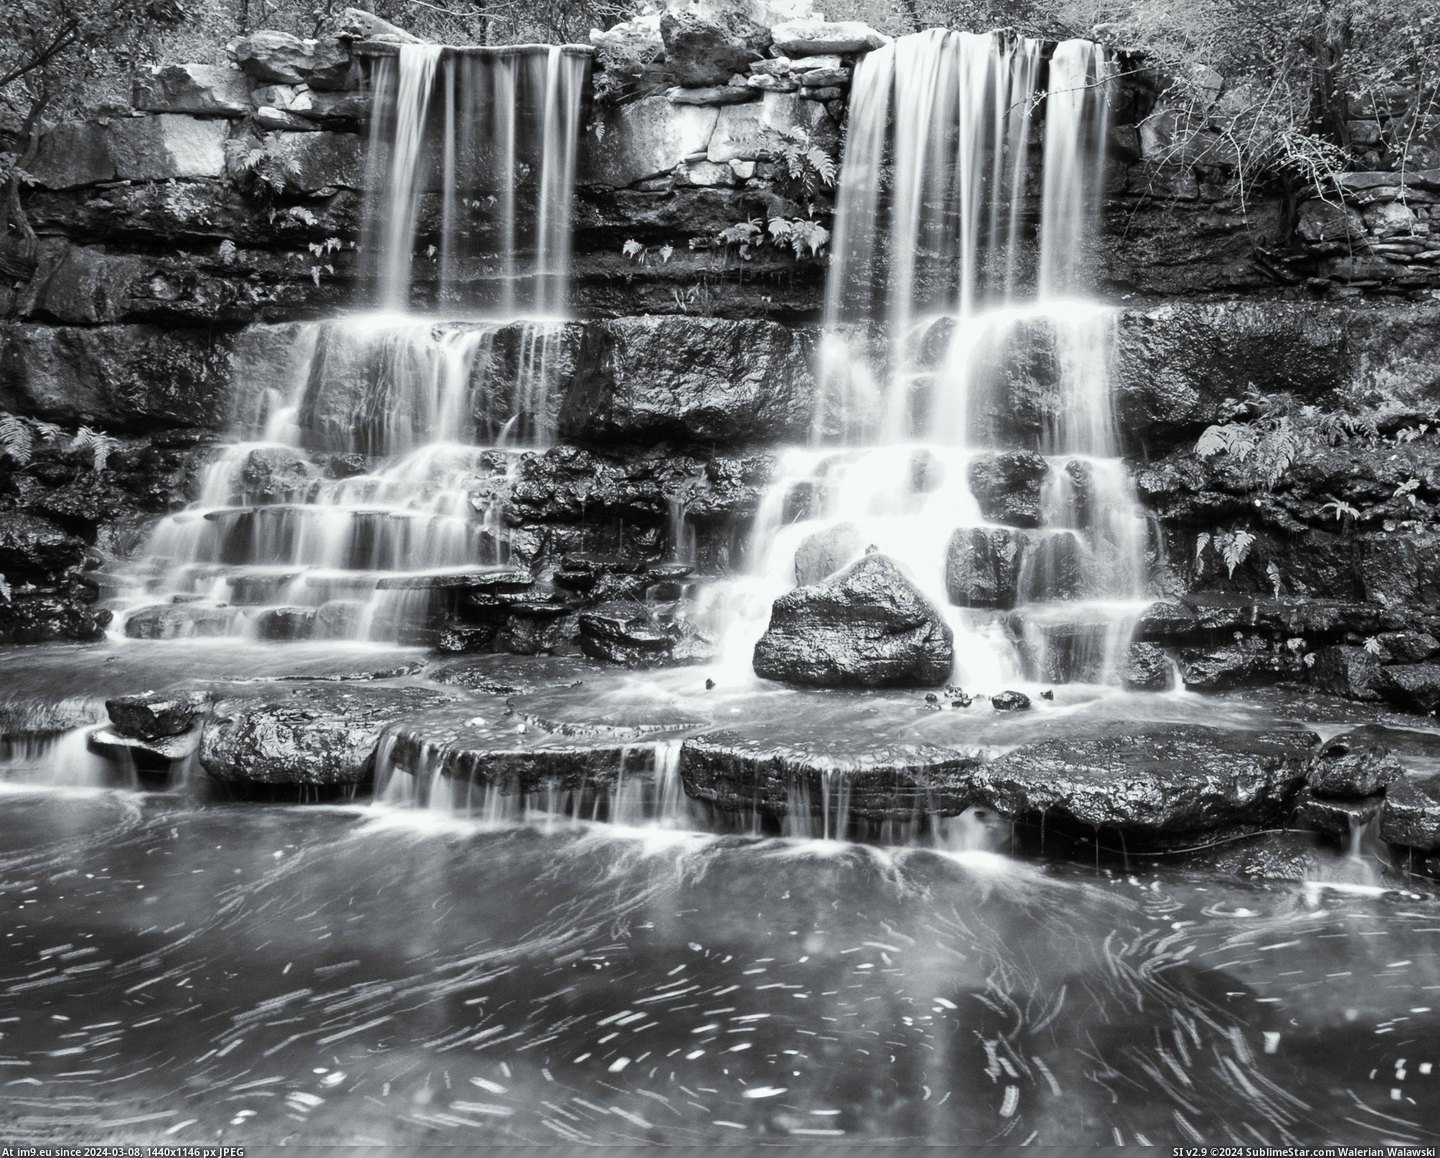 #Park #Austin #Zilker #Waterfall [Earthporn] Waterfall at Zilker Park, Austin, TX [2806x2245] [OC] Pic. (Image of album My r/EARTHPORN favs))